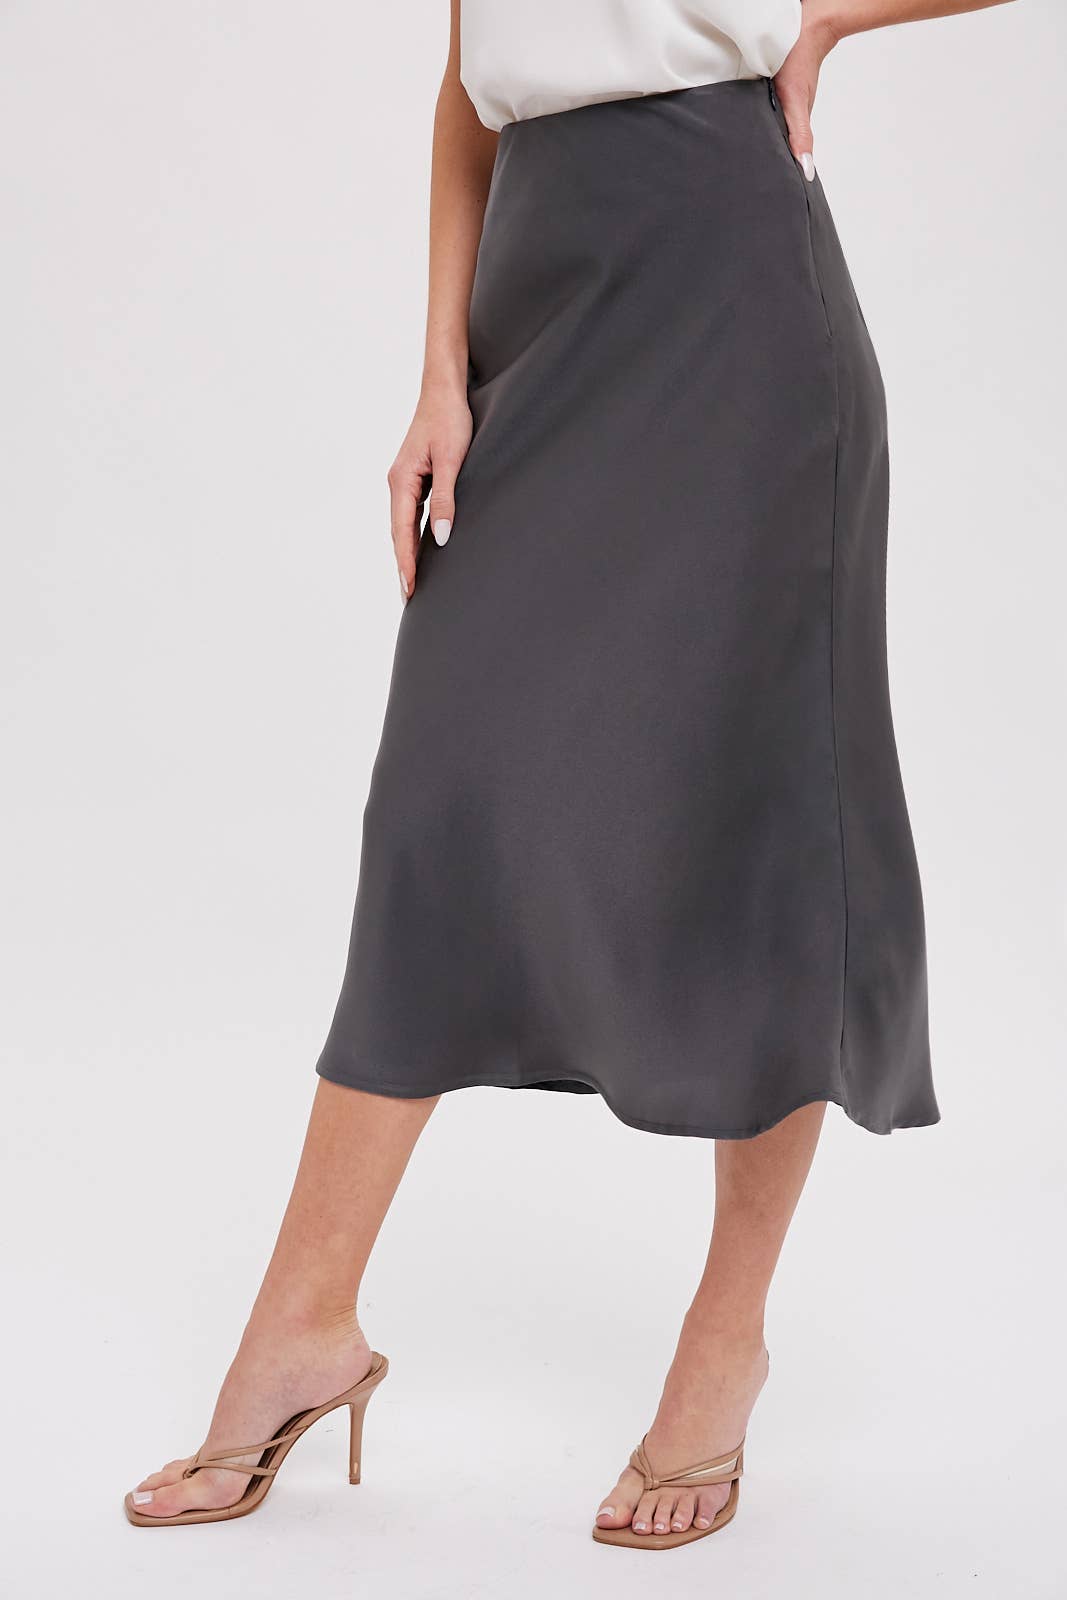 Black Satin Midi Skirt